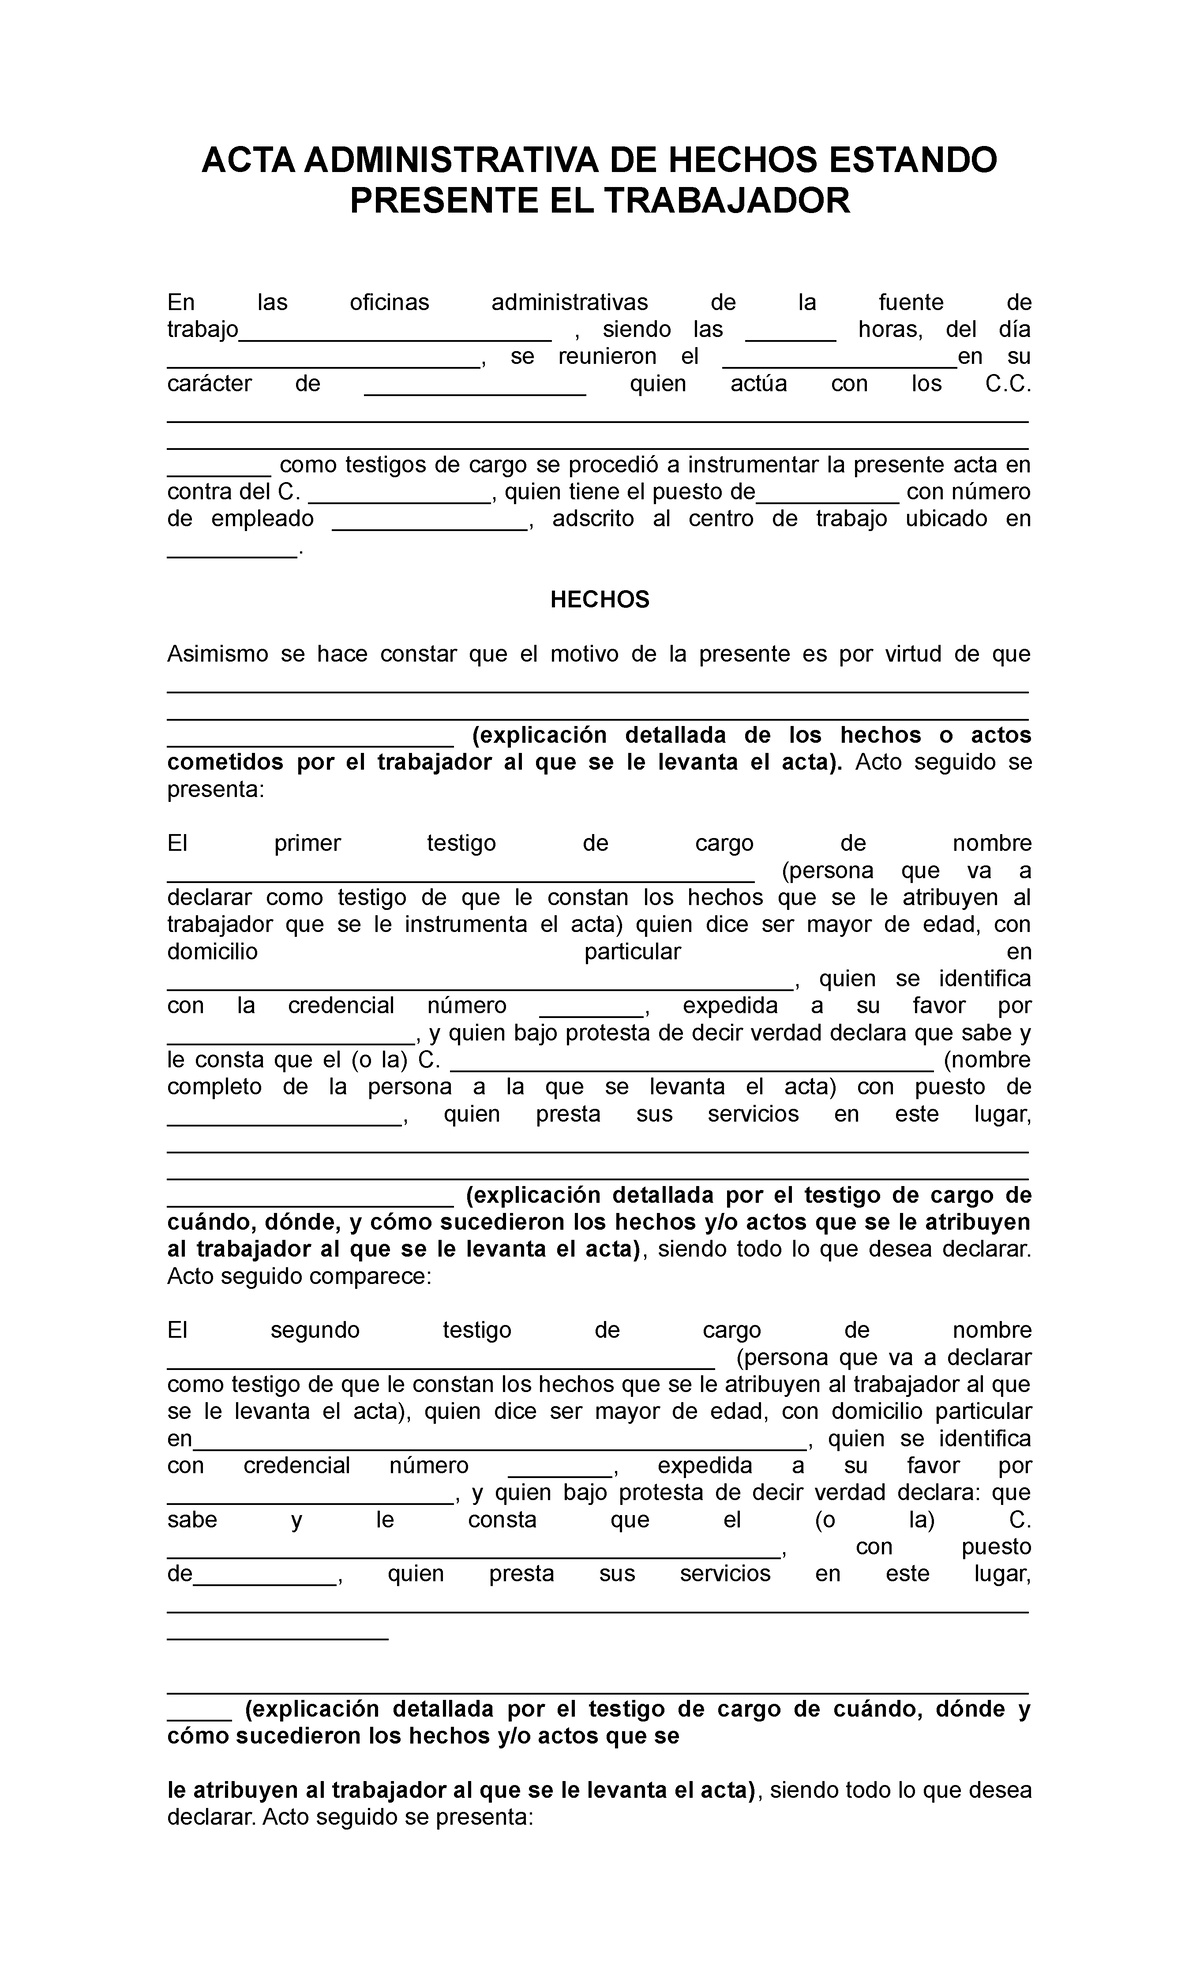 Acta administrativa de hechos ejemplo 2022 - ACTA ADMINISTRATIVA DE HECHOS  ESTANDO PRESENTE EL - Studocu